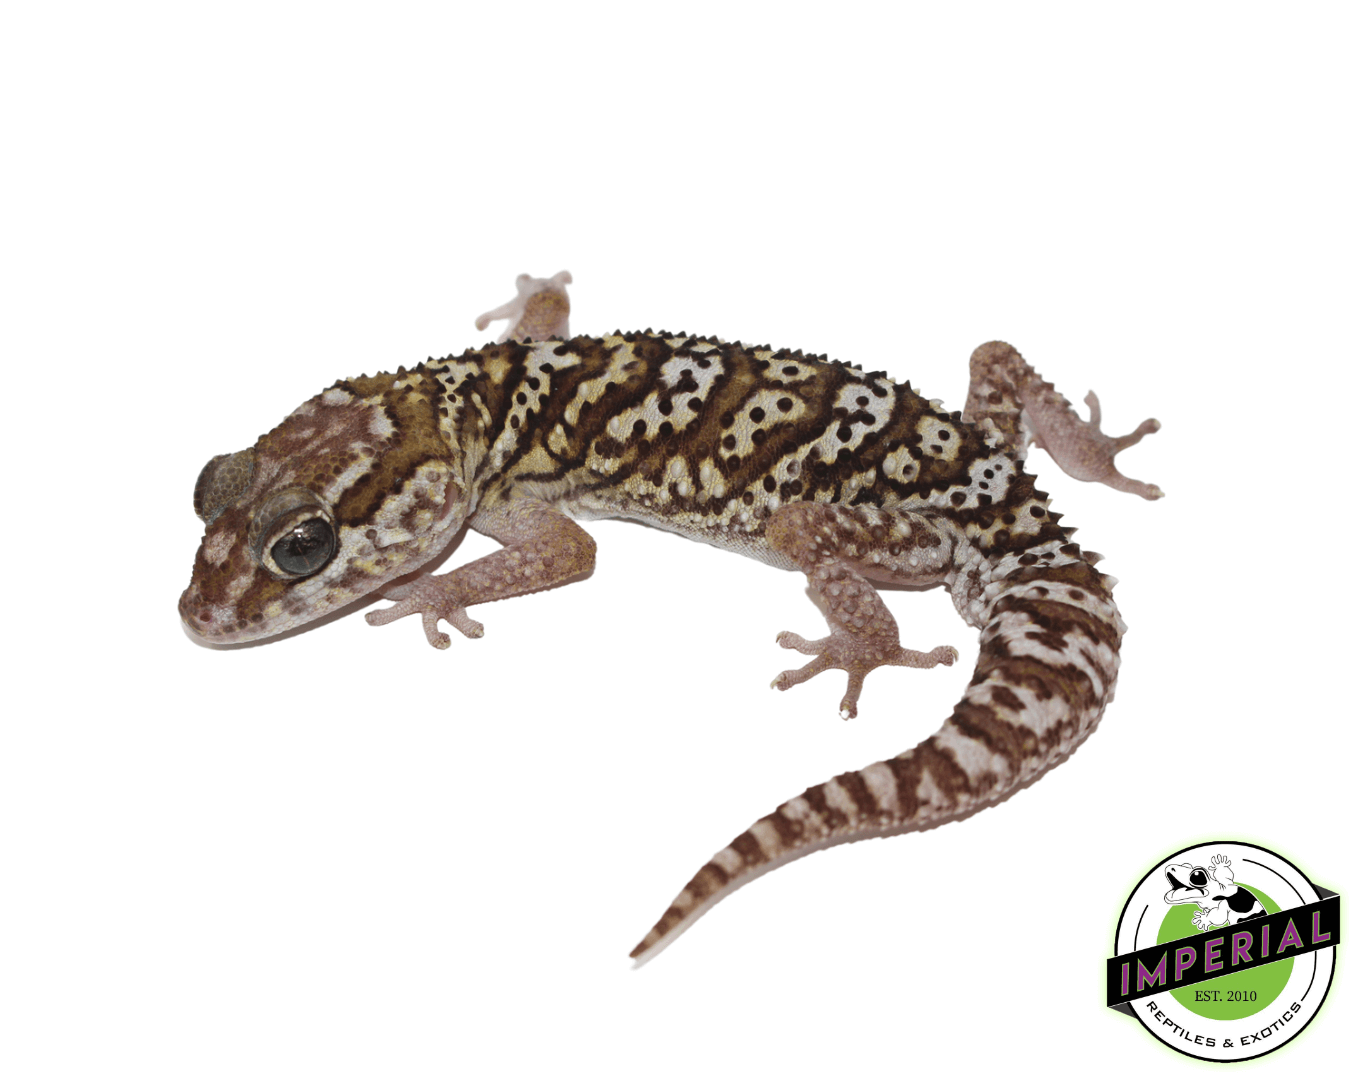 pictus gecko for sale, buy reptiles online